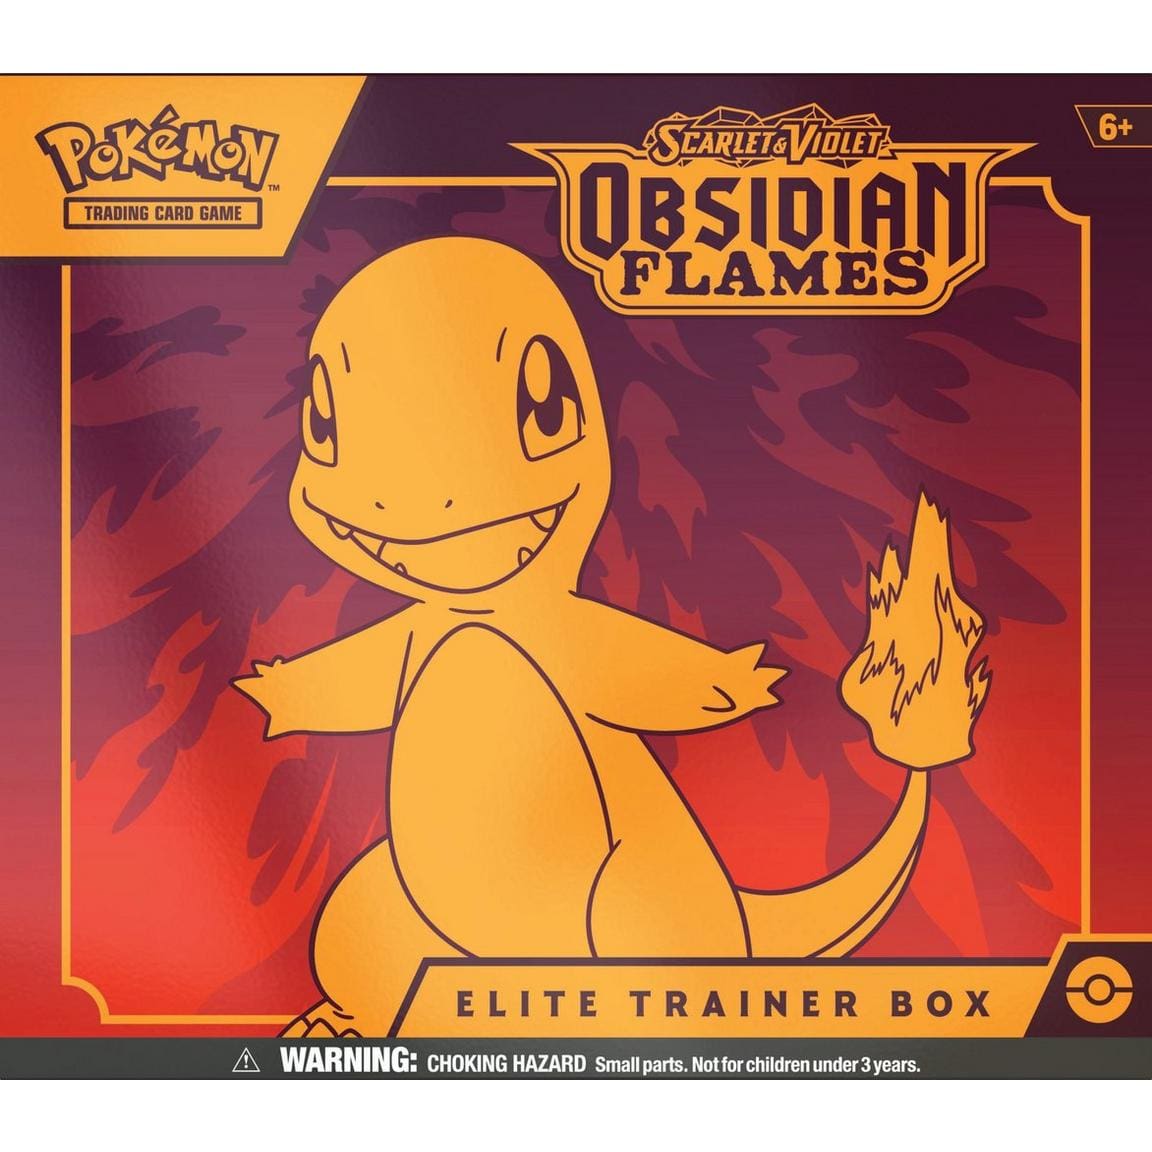 Obsidian Flames, Pokemon Trainer Set